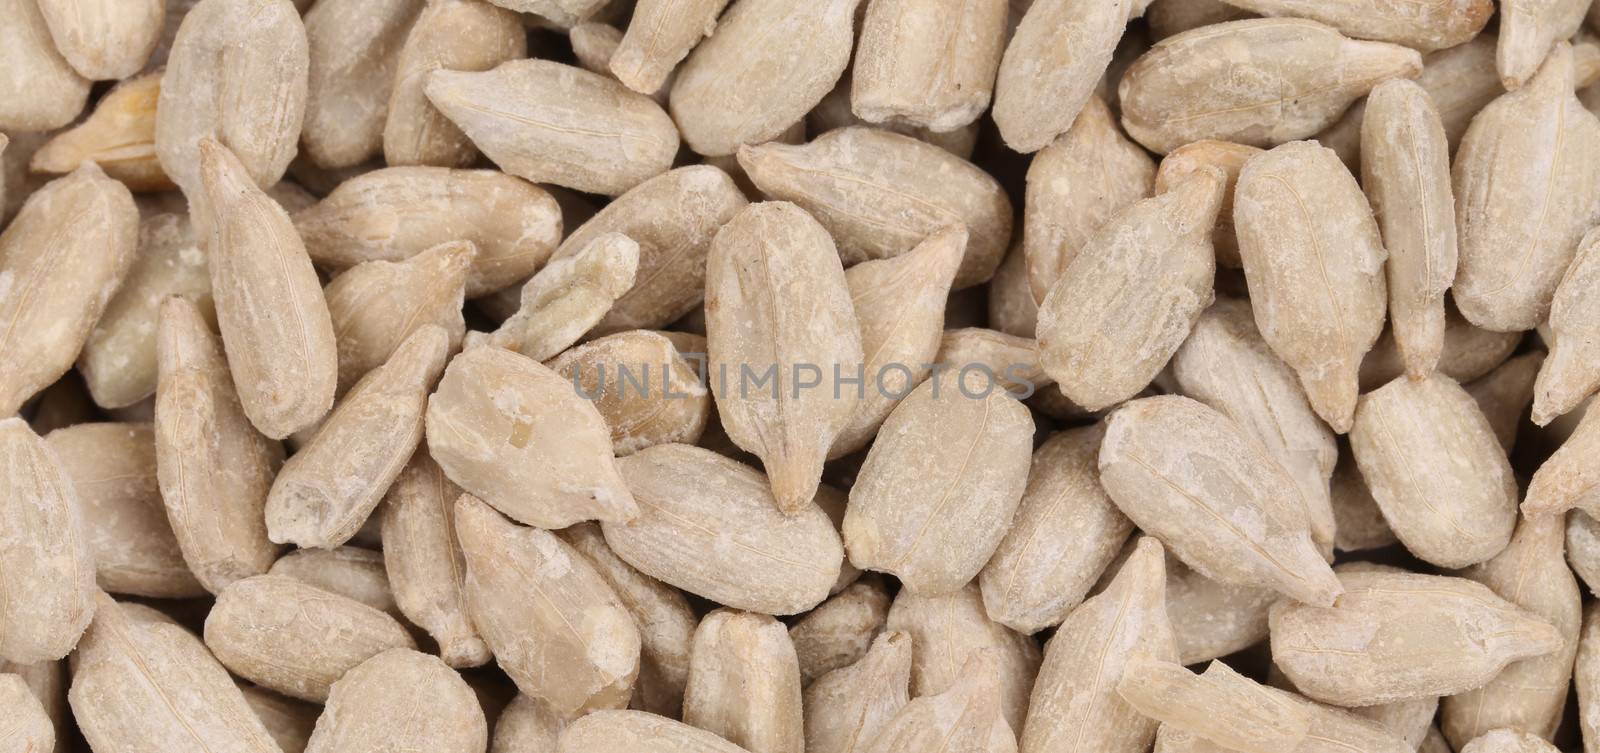 Background of sunflower seeds. Whole background. White seeds.